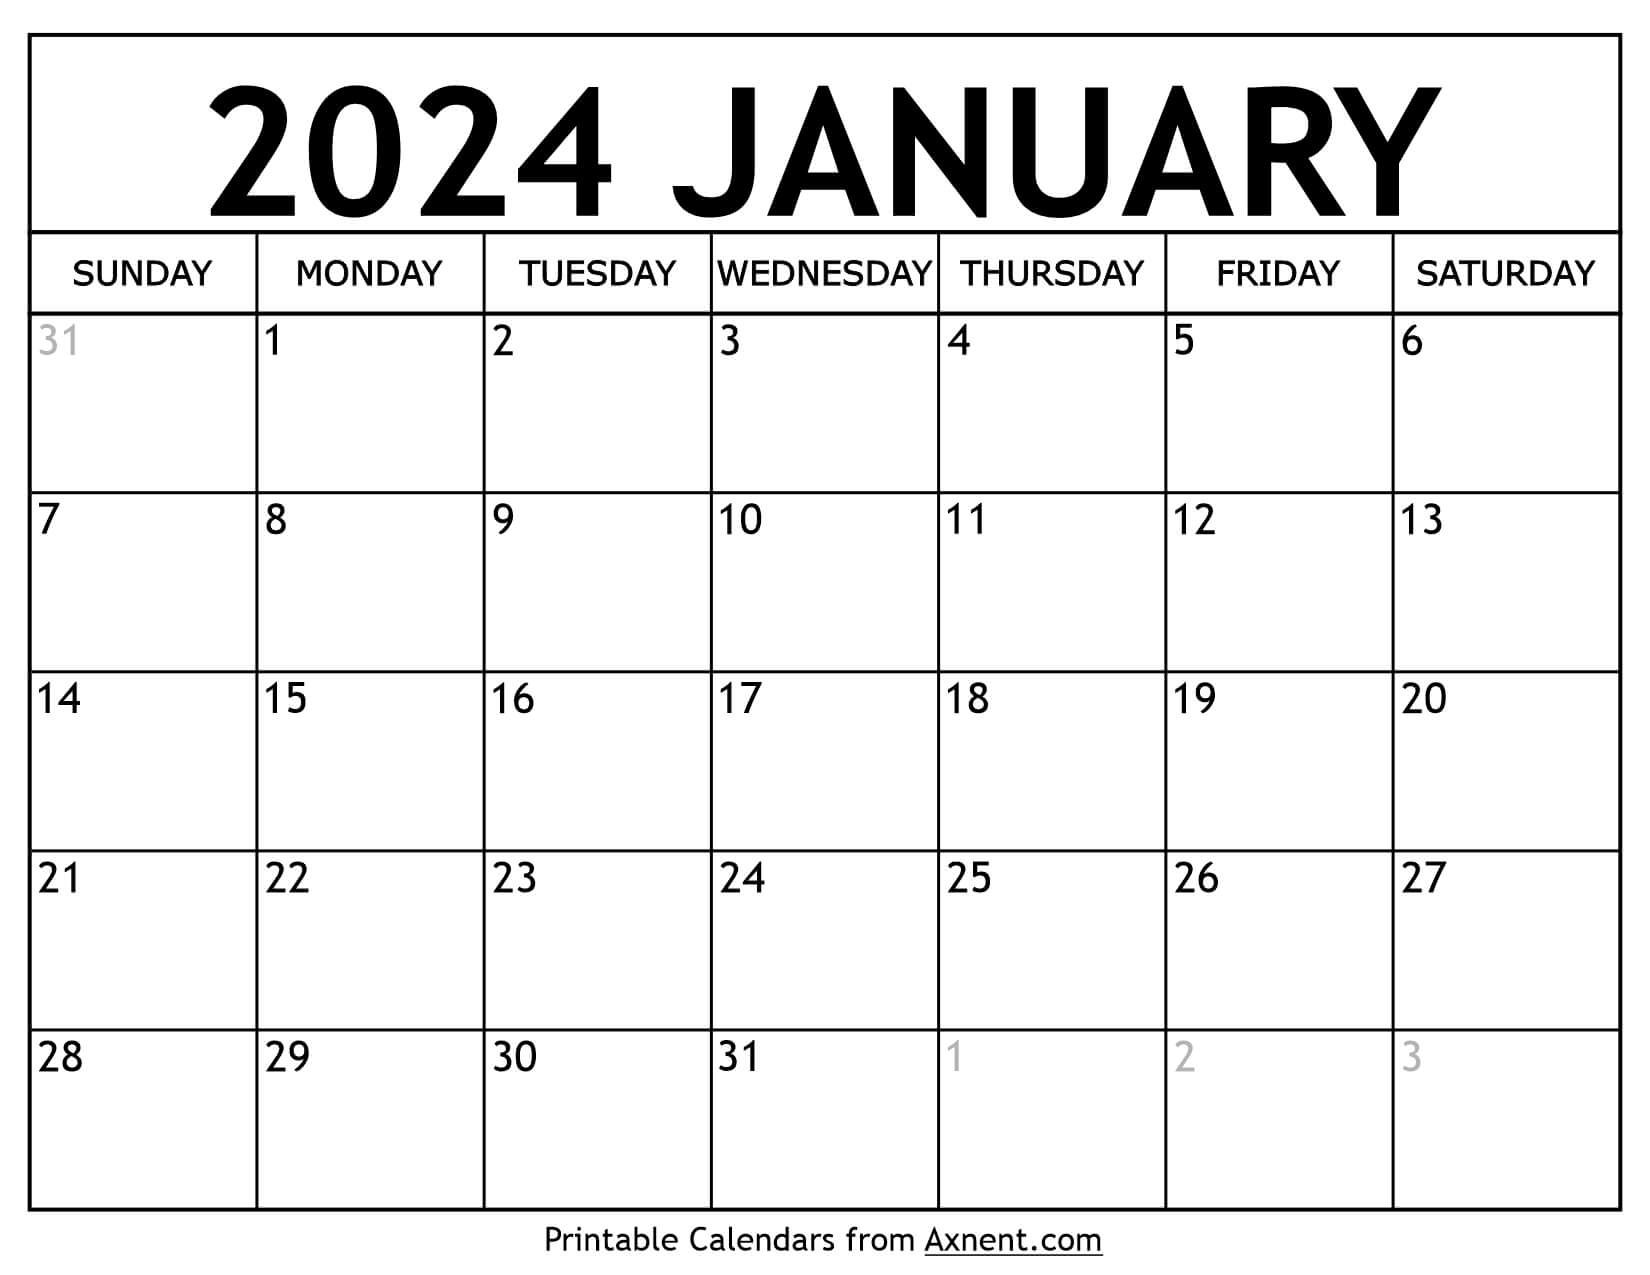 Printable January 2024 Calendar Template - Print Now for Calendar 2024 January Printable